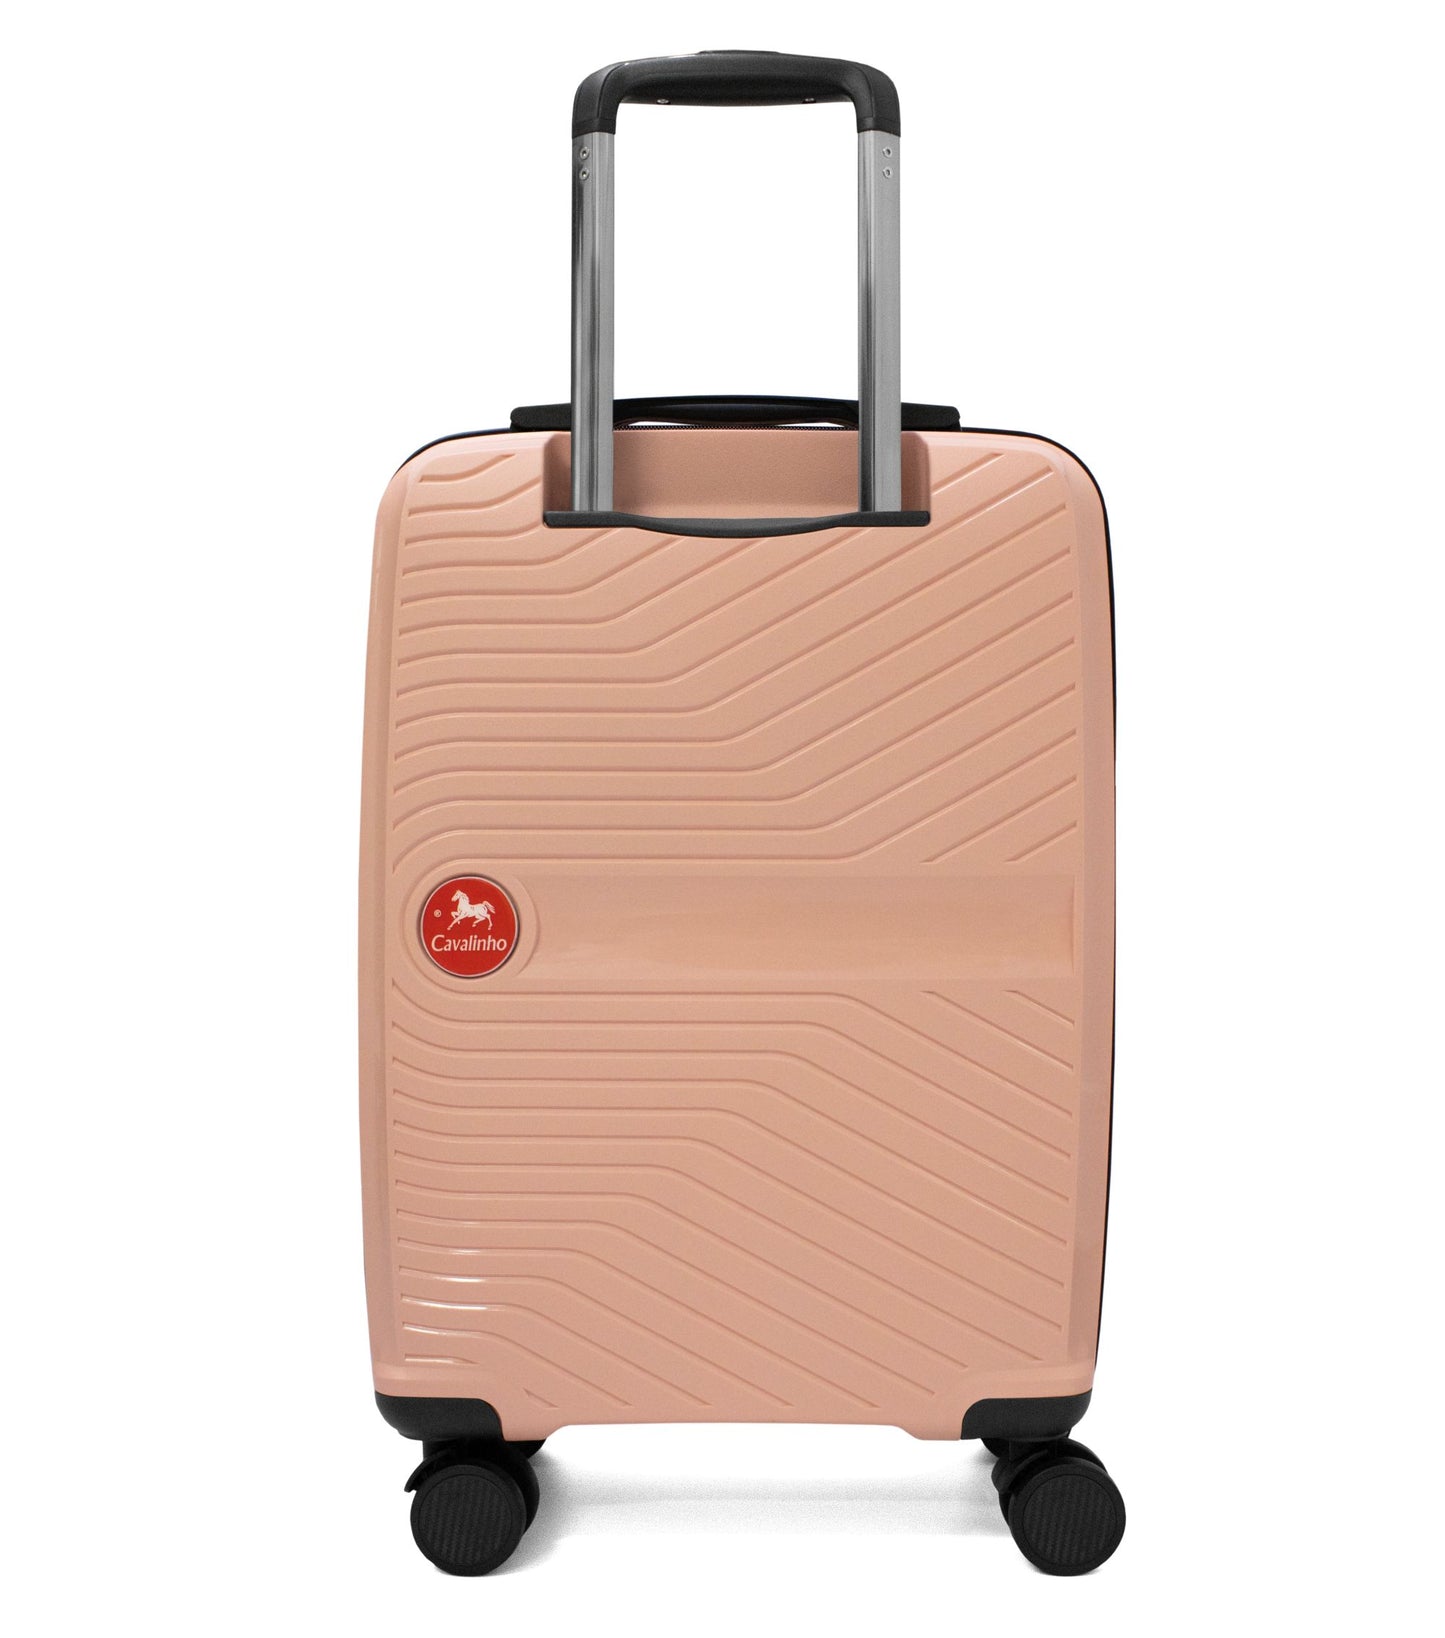 Cavalinho Colorful Carry-on Hardside Luggage (19") - 19 inch Salmon - 68020004.11.19_3